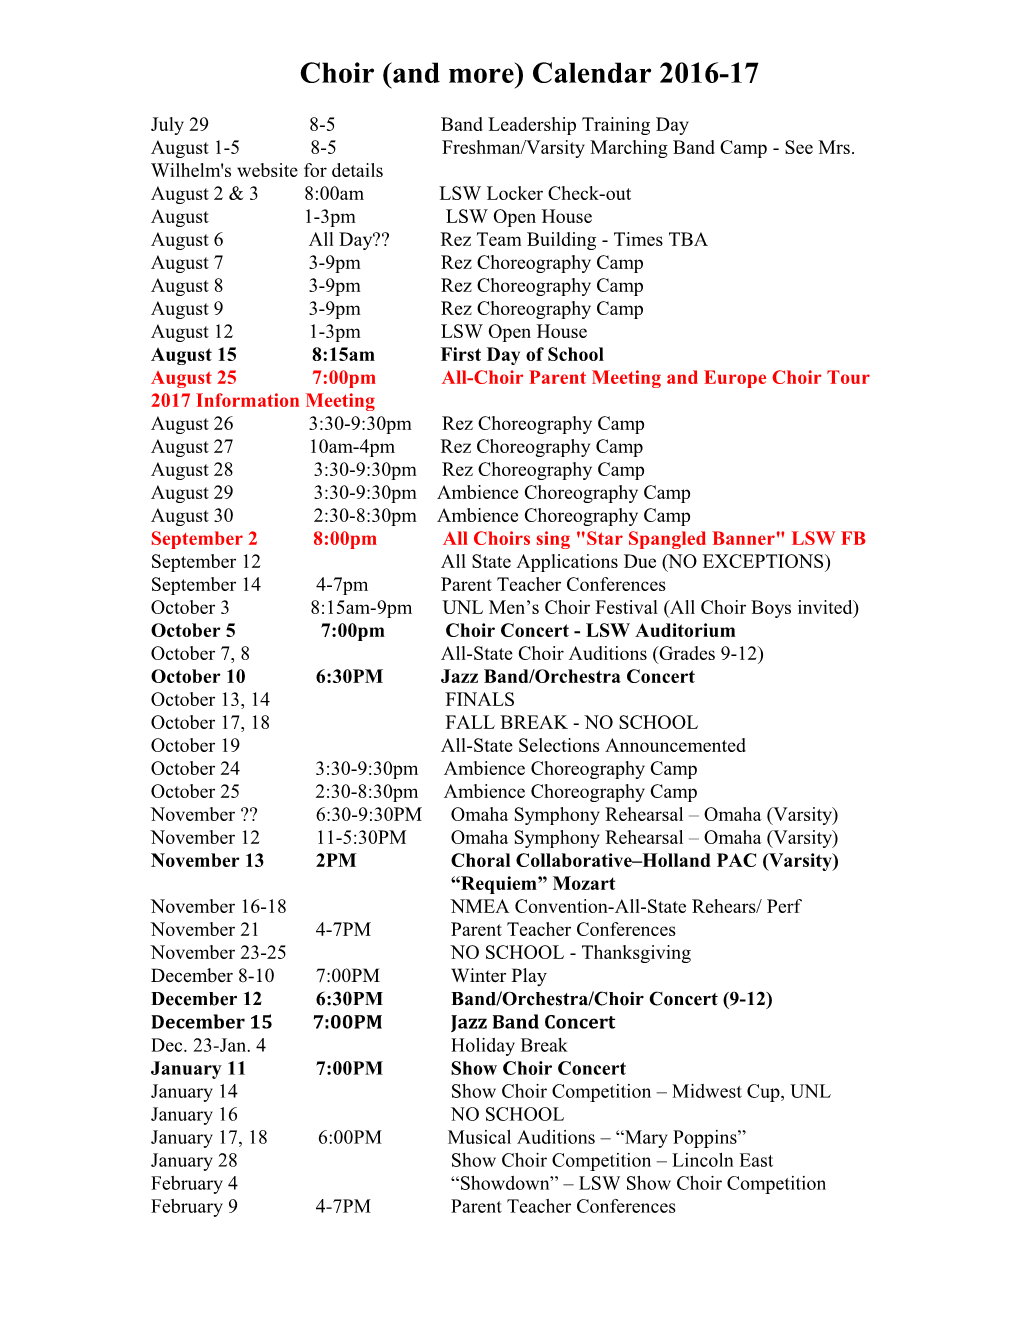 Choir (And More) Calendar 2013-14